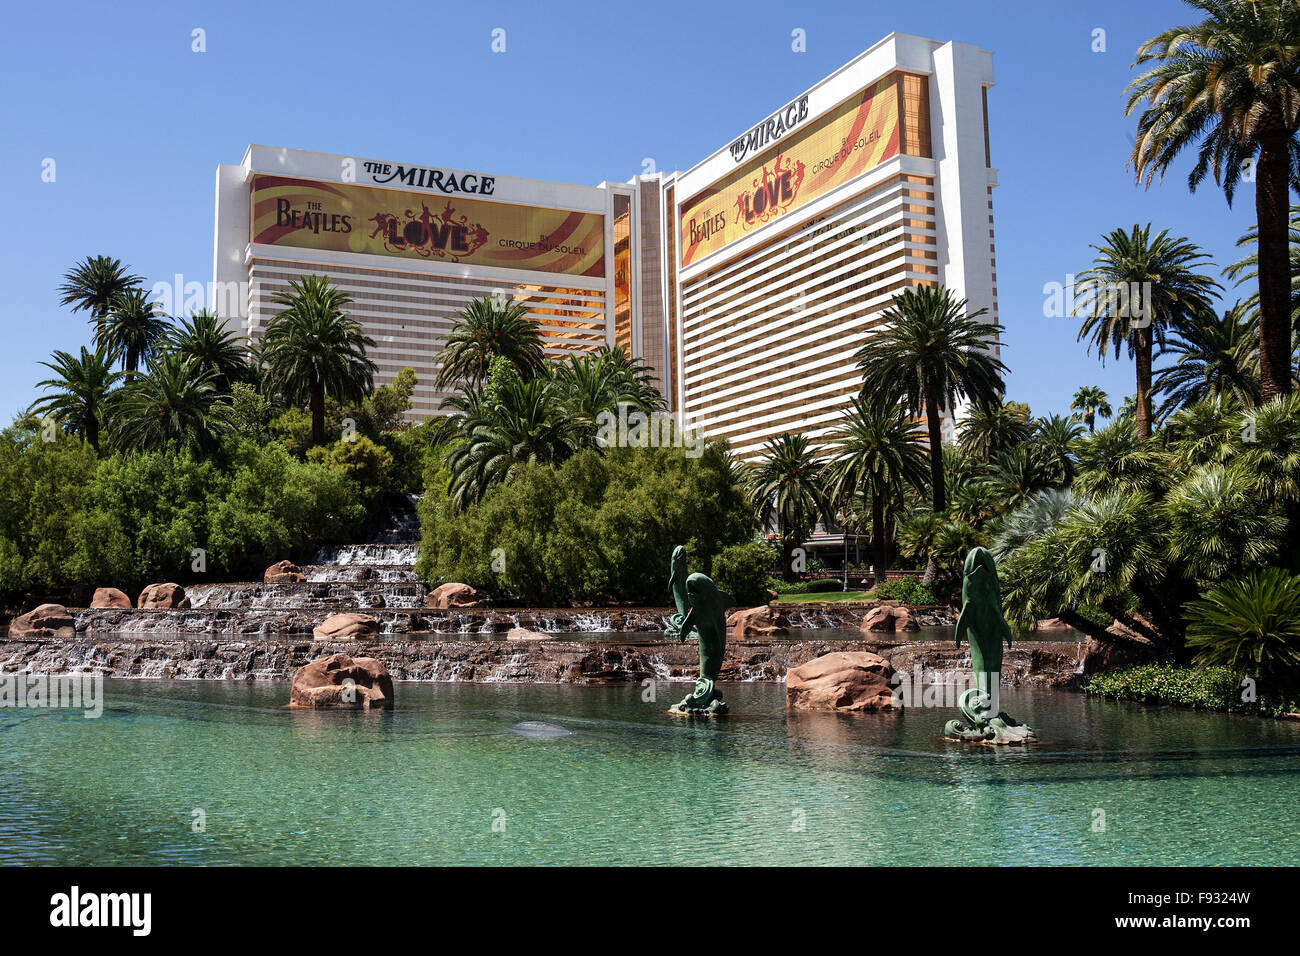 The Mirage Hotel, Las Vegas Boulevard, Las Vegas Strip, The Strip, Las Vegas, Nevada, USA Stock Photo